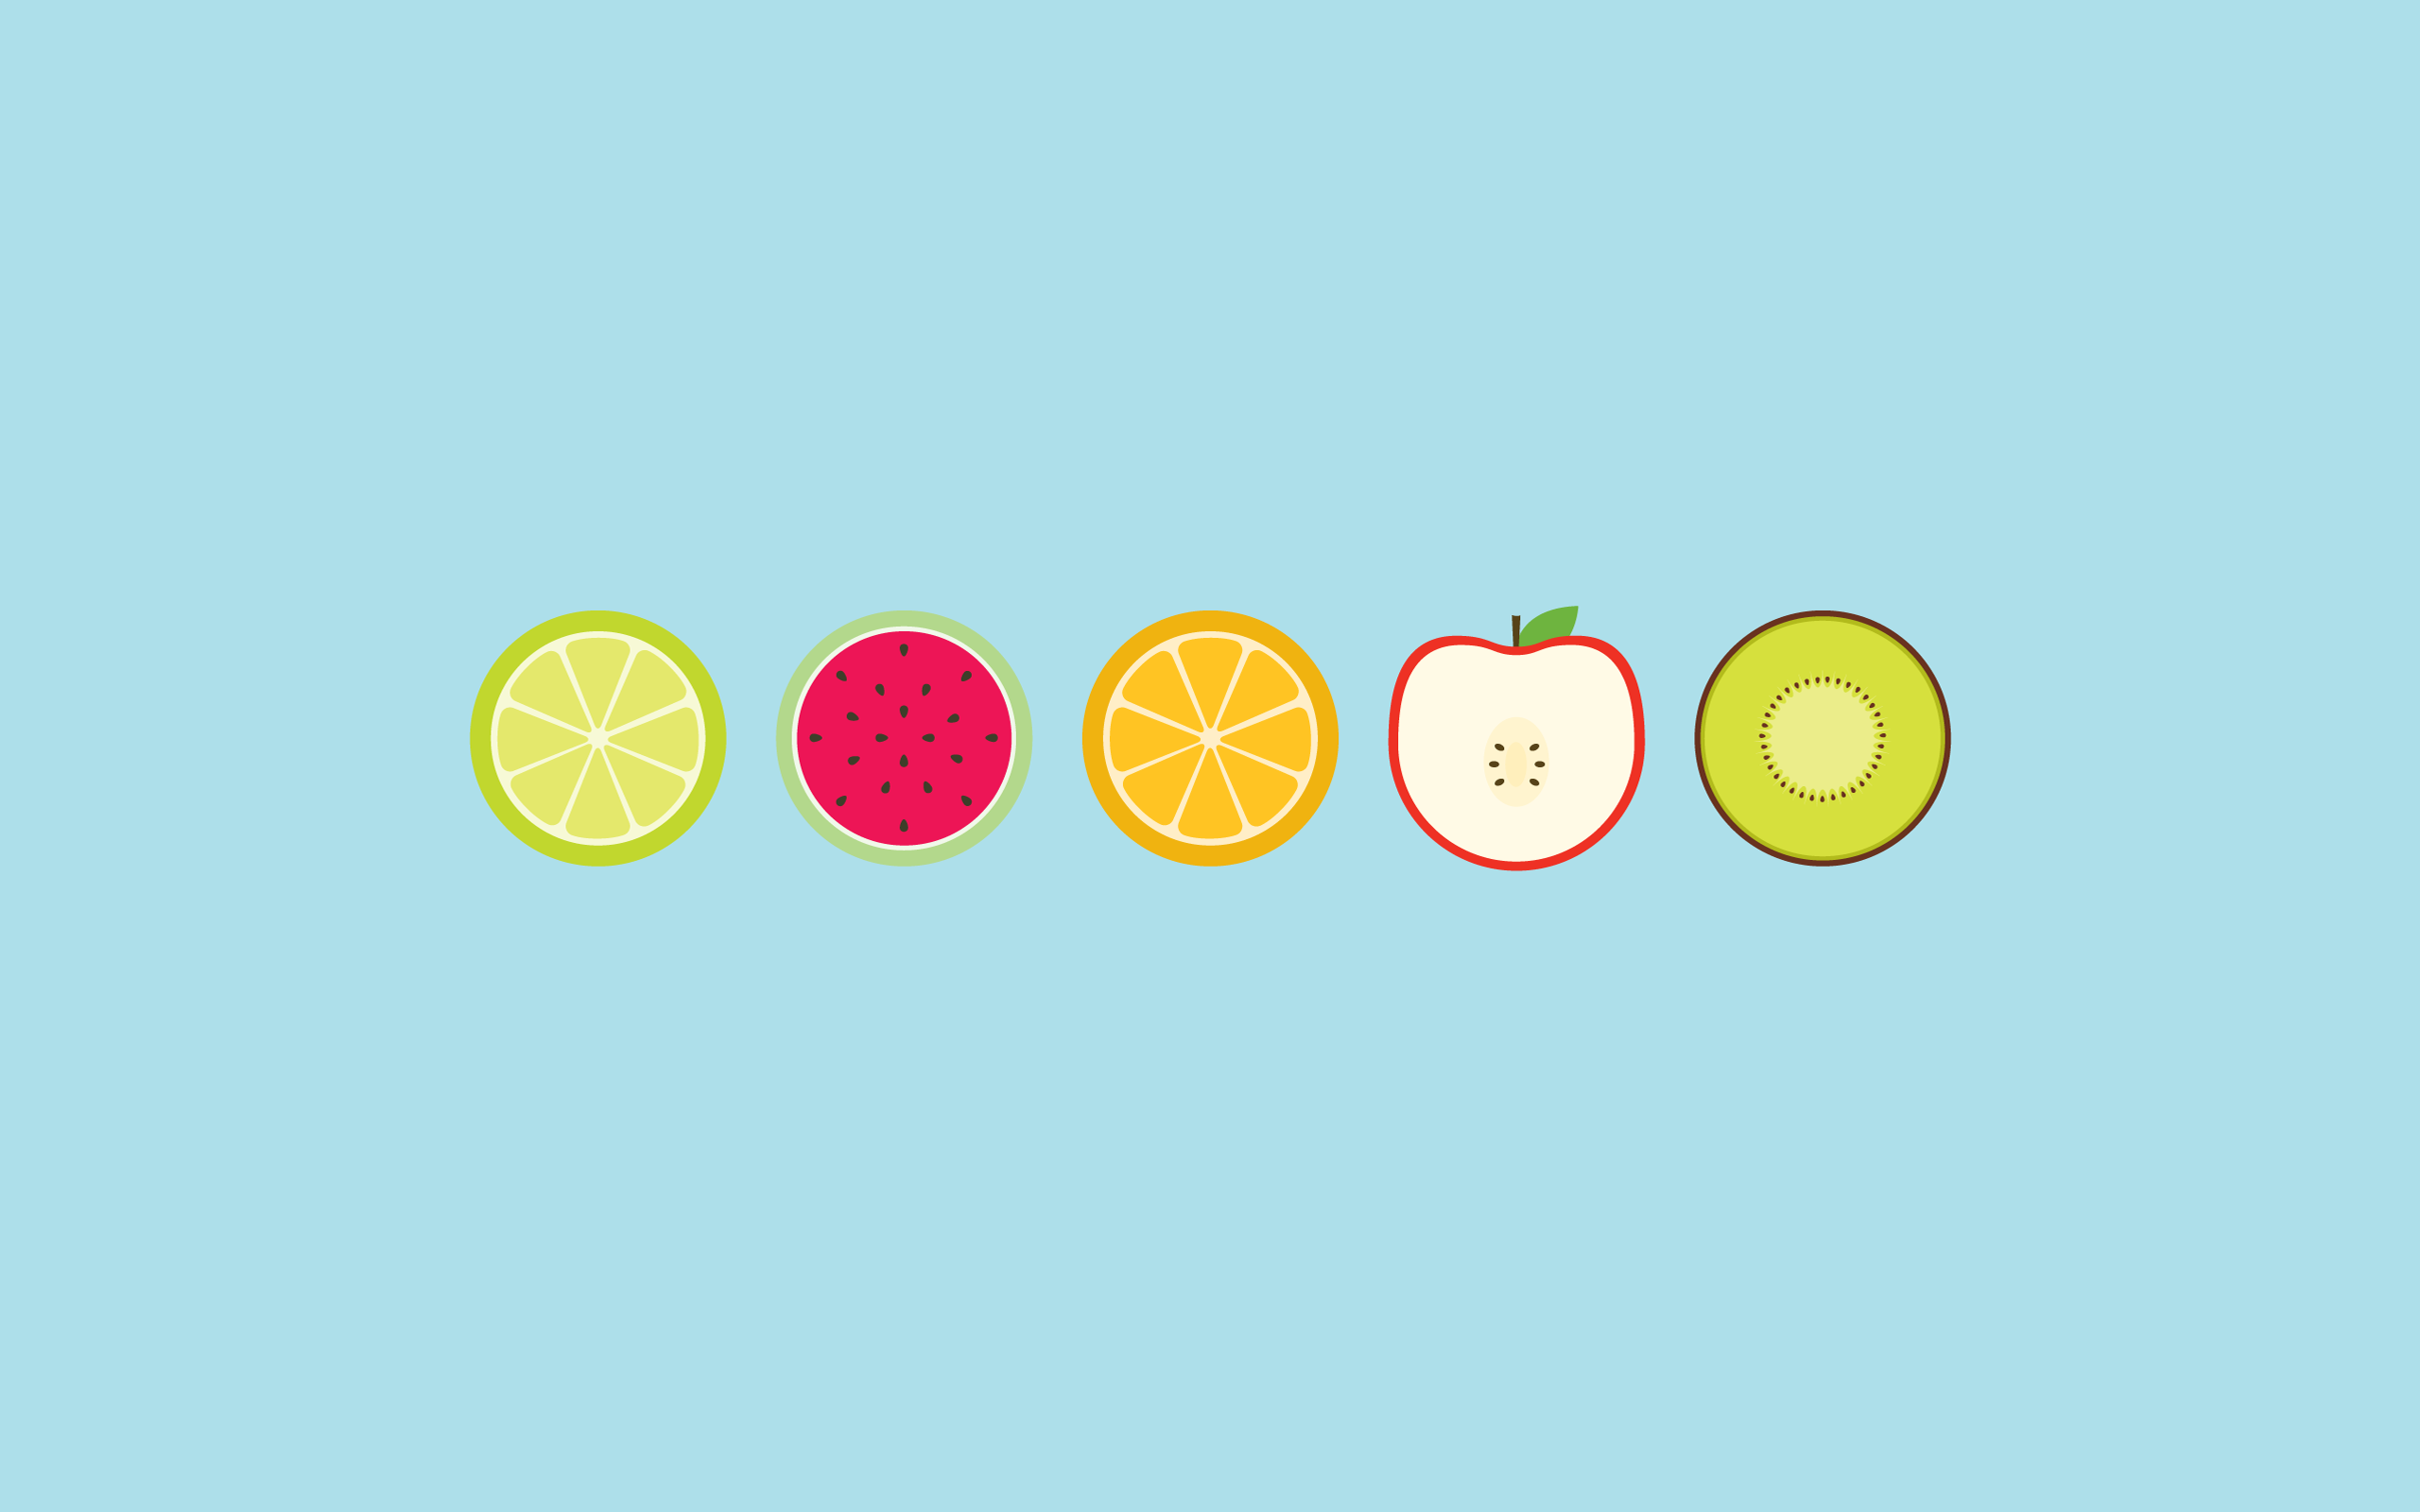 General 2560x1600 minimalism digital art fruit blue cyan cyan background light blue food apples lemons orange (fruit) simple background artwork